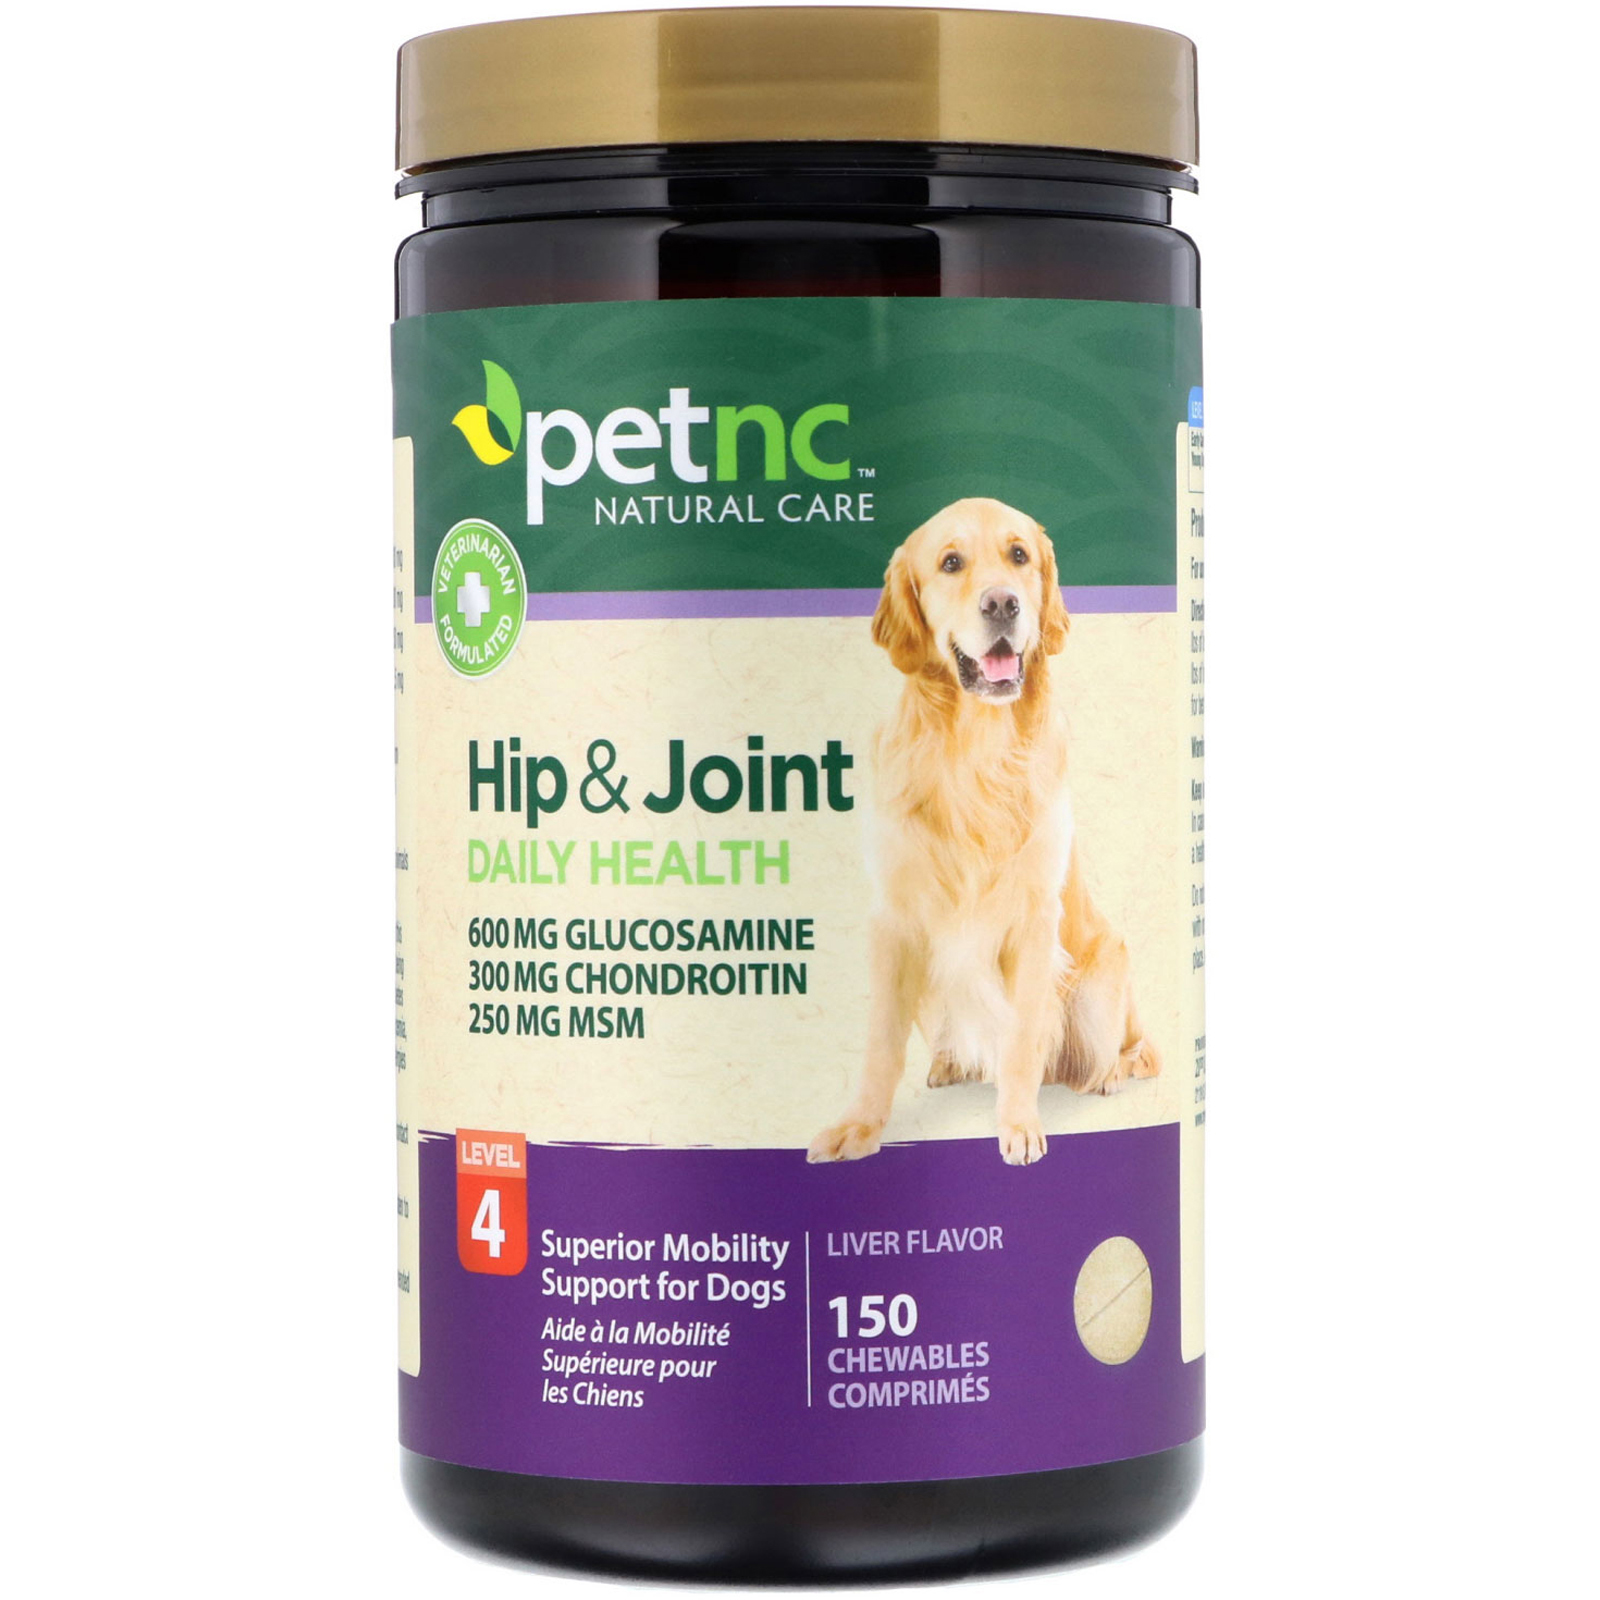 petnc natural care hip & joint soft chews